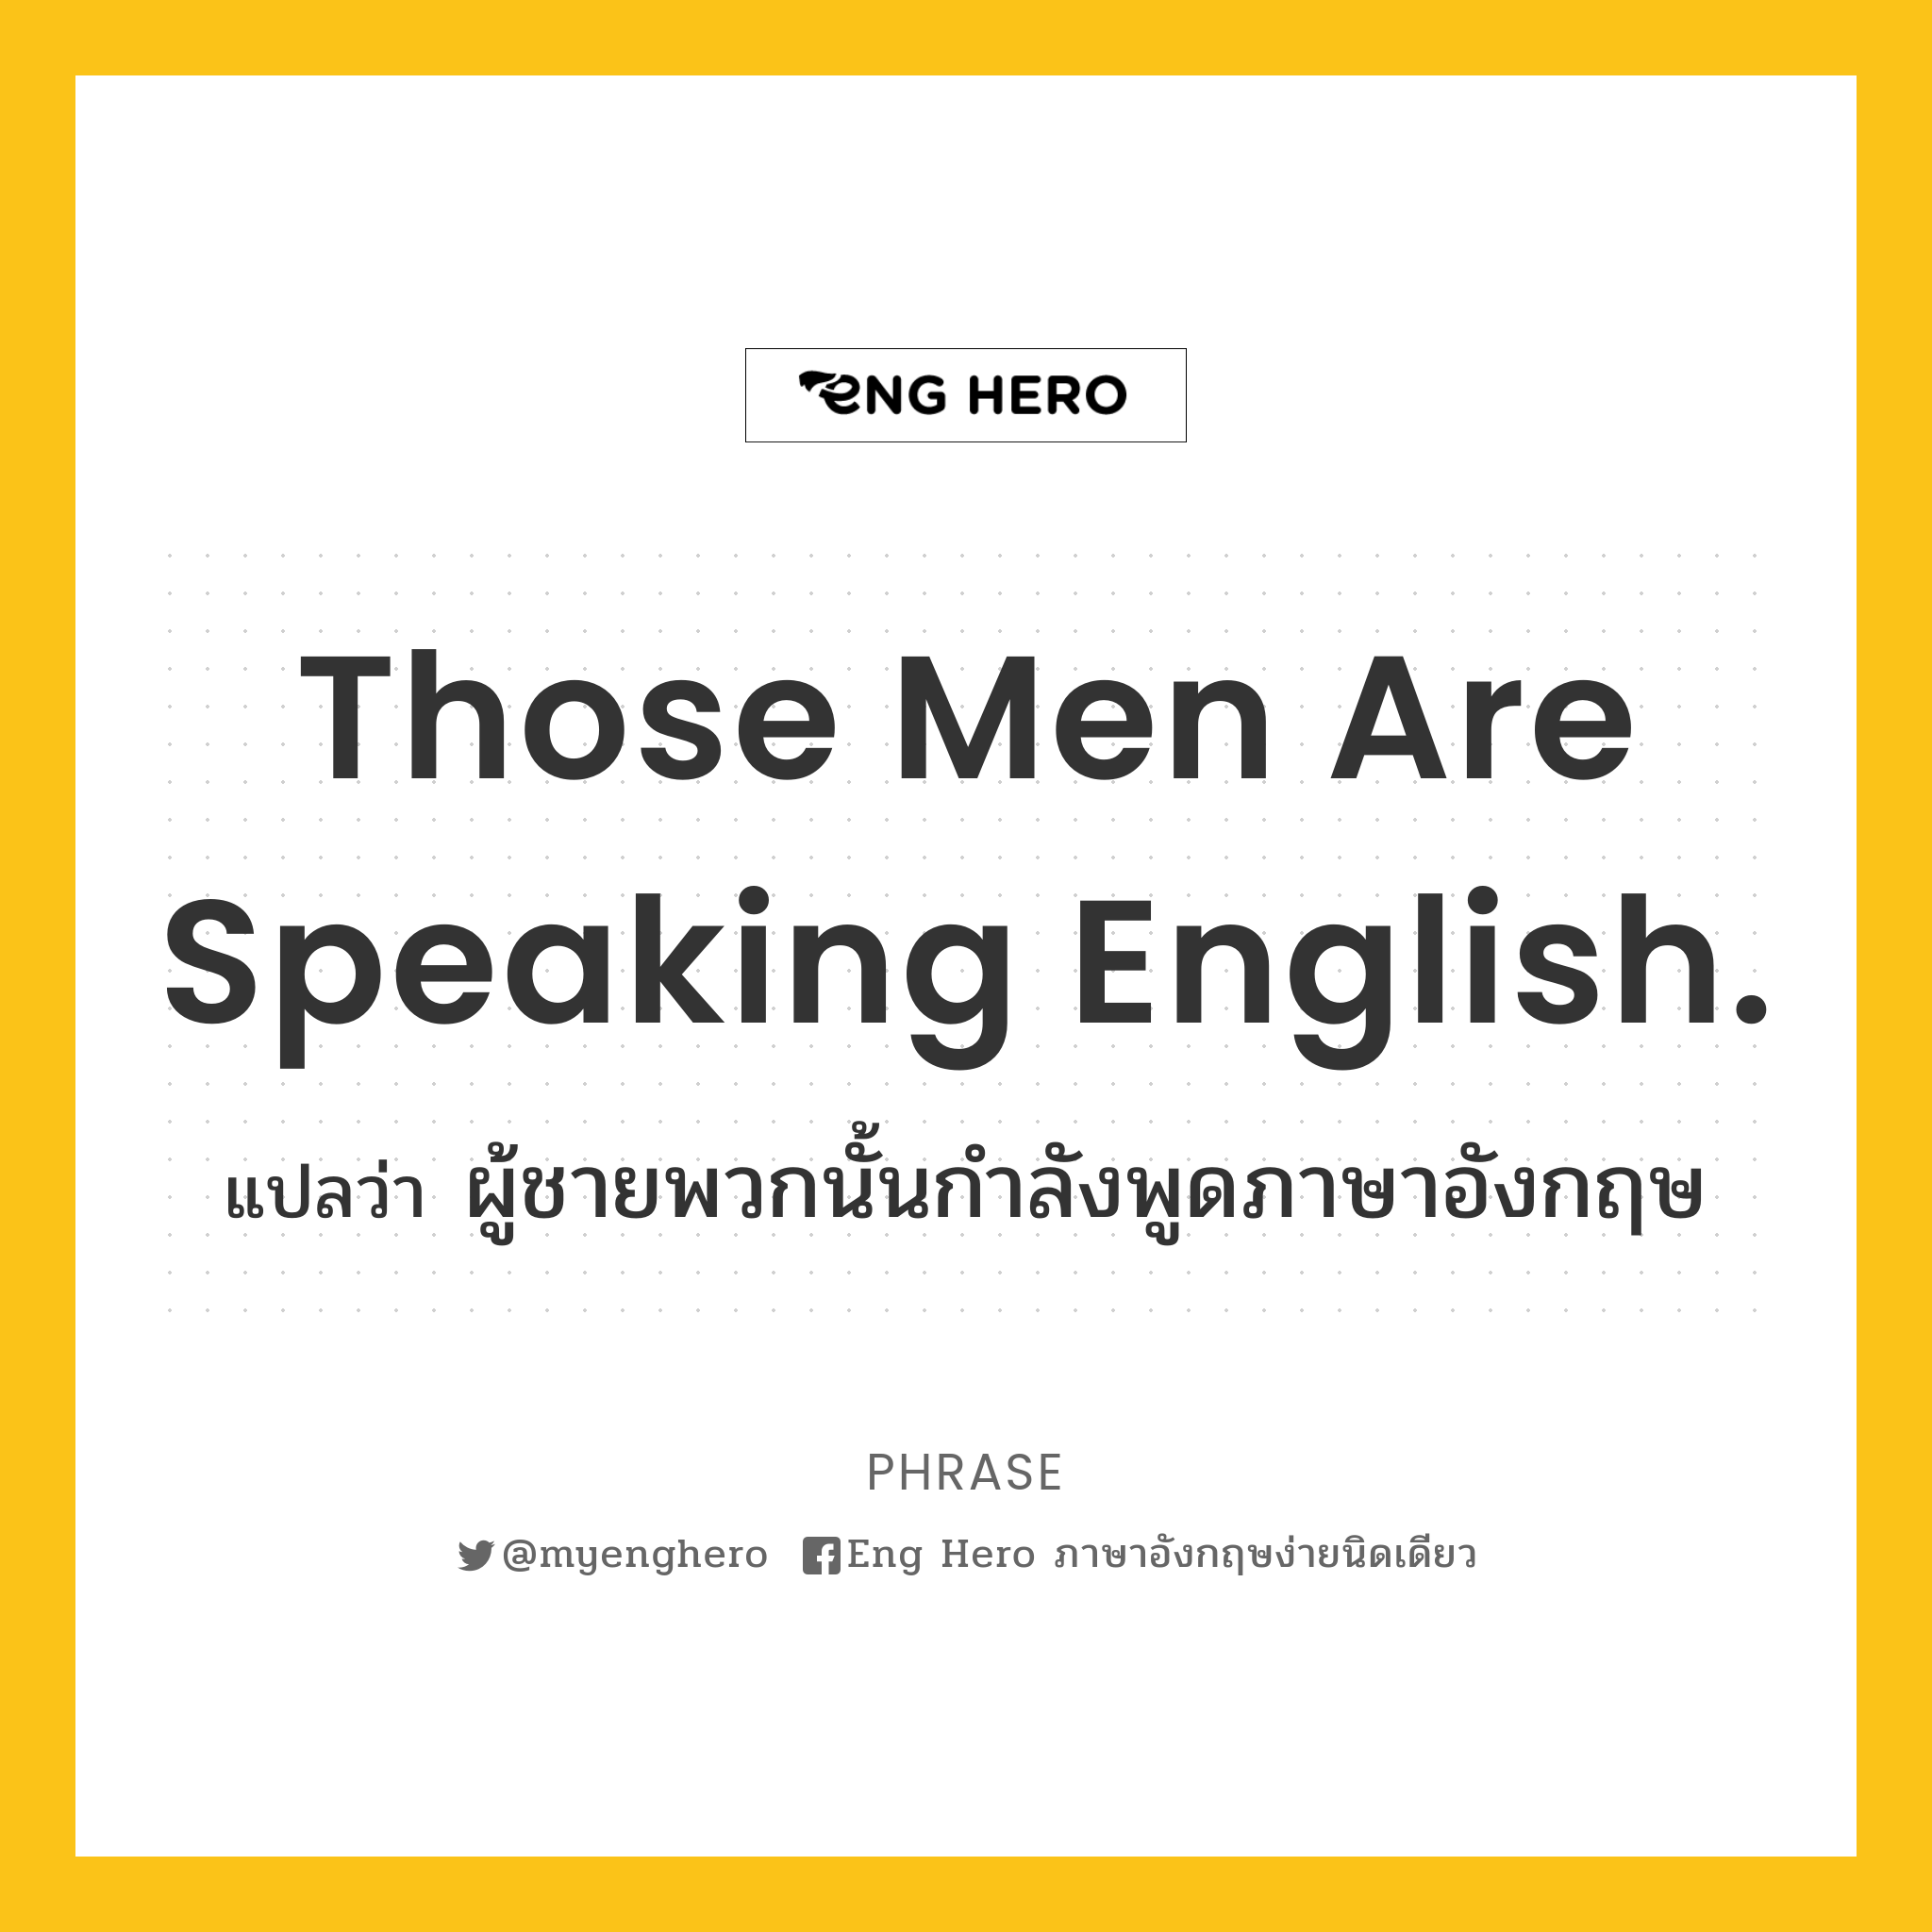 Those men are speaking English.